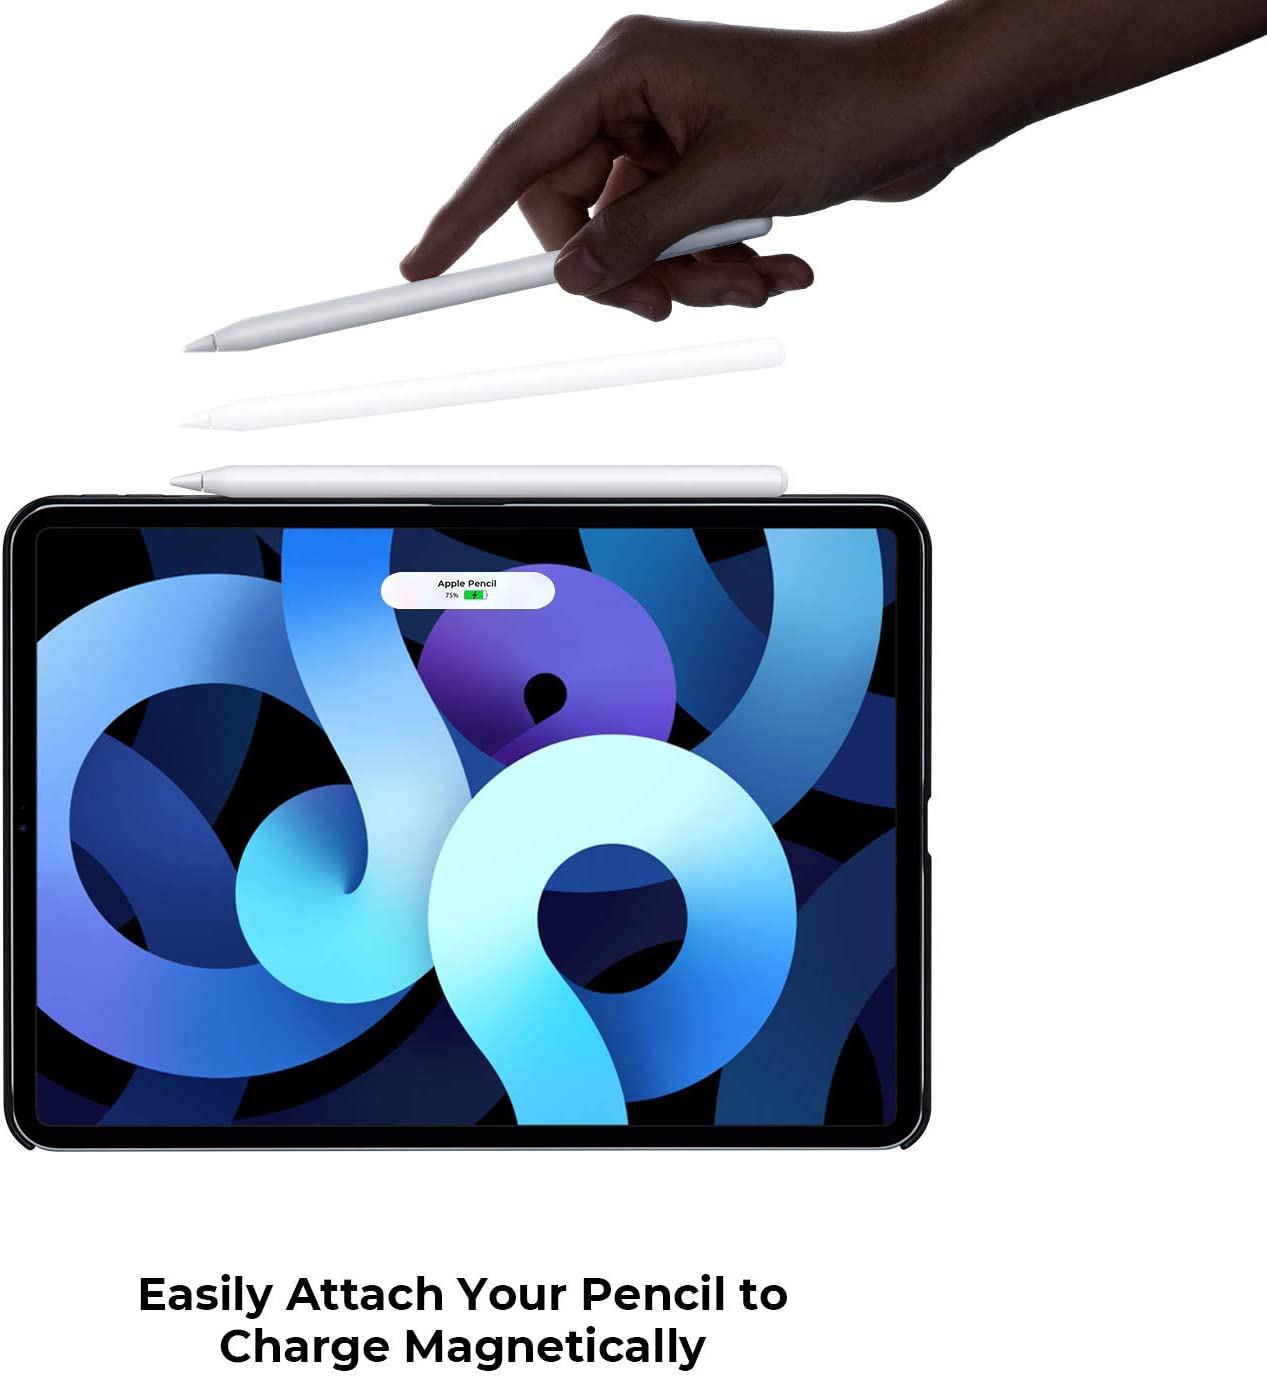 Pitaka iPad Air 10.9" 2020 / iPad Pro 11" 2018 MagEZ Case - Black/Grey Twill